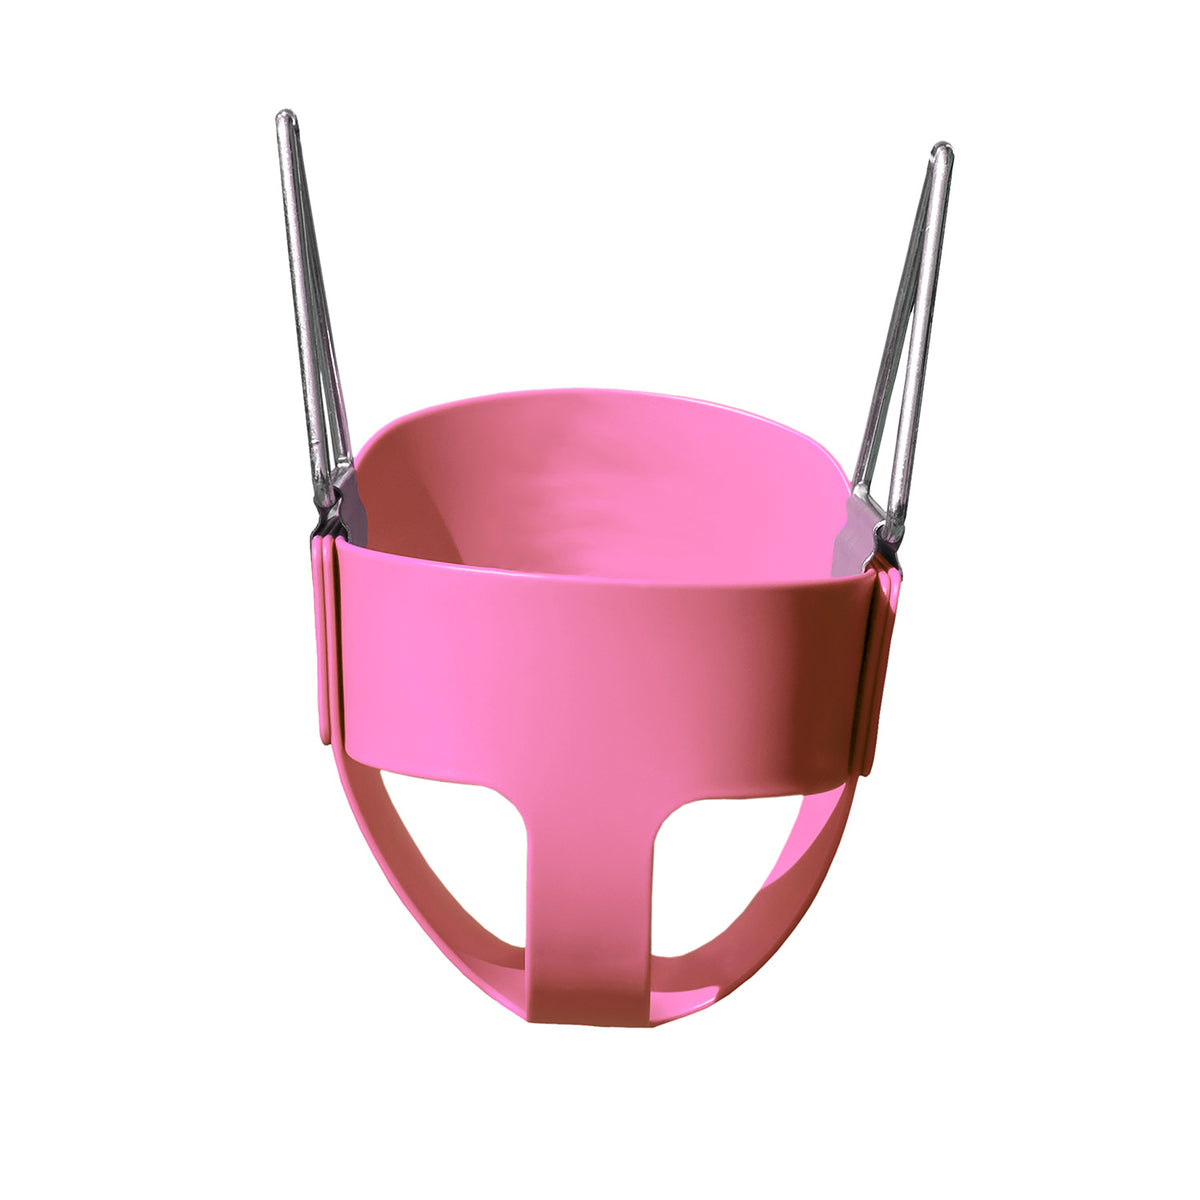 Gorilla-Playsets-Full-Bucket-Swing-Pink-White-Back-Close-Up